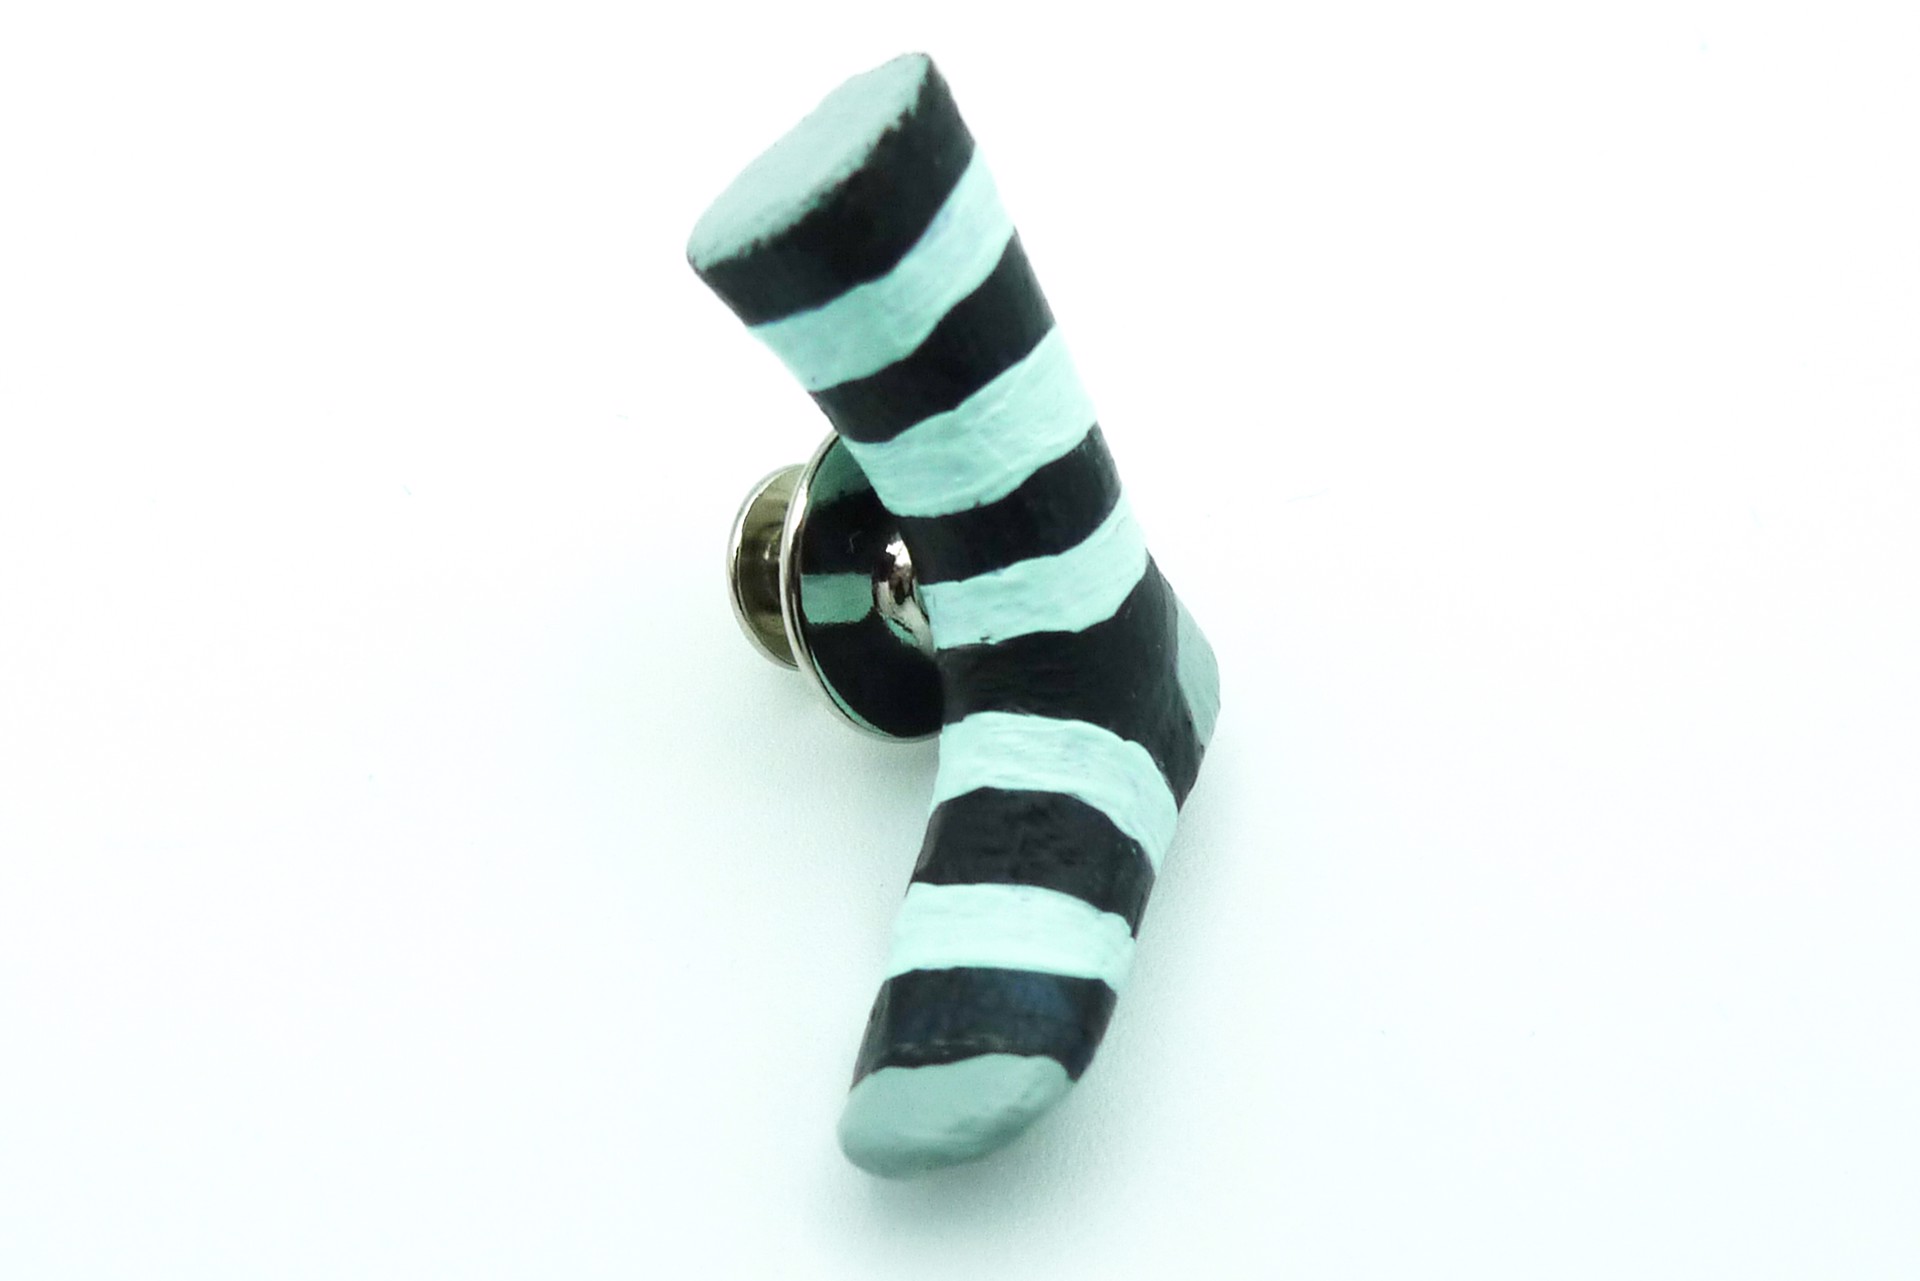 Small Sock Pin by Jessica Calderwood